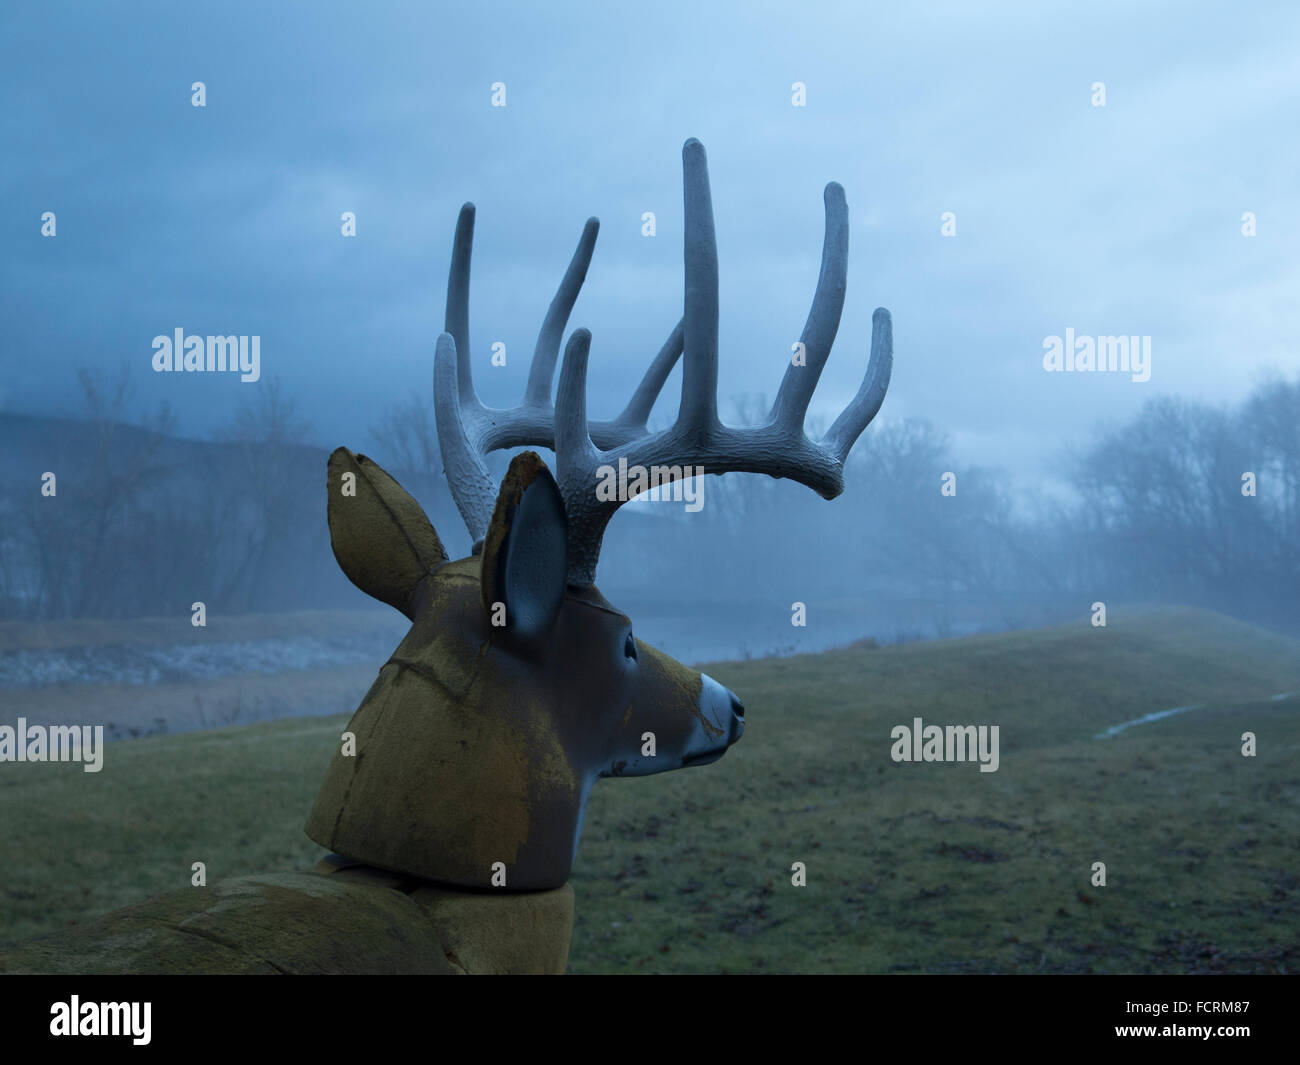 A deer practice target stands in a winter fog in rural Massachusetts. Stock Photo